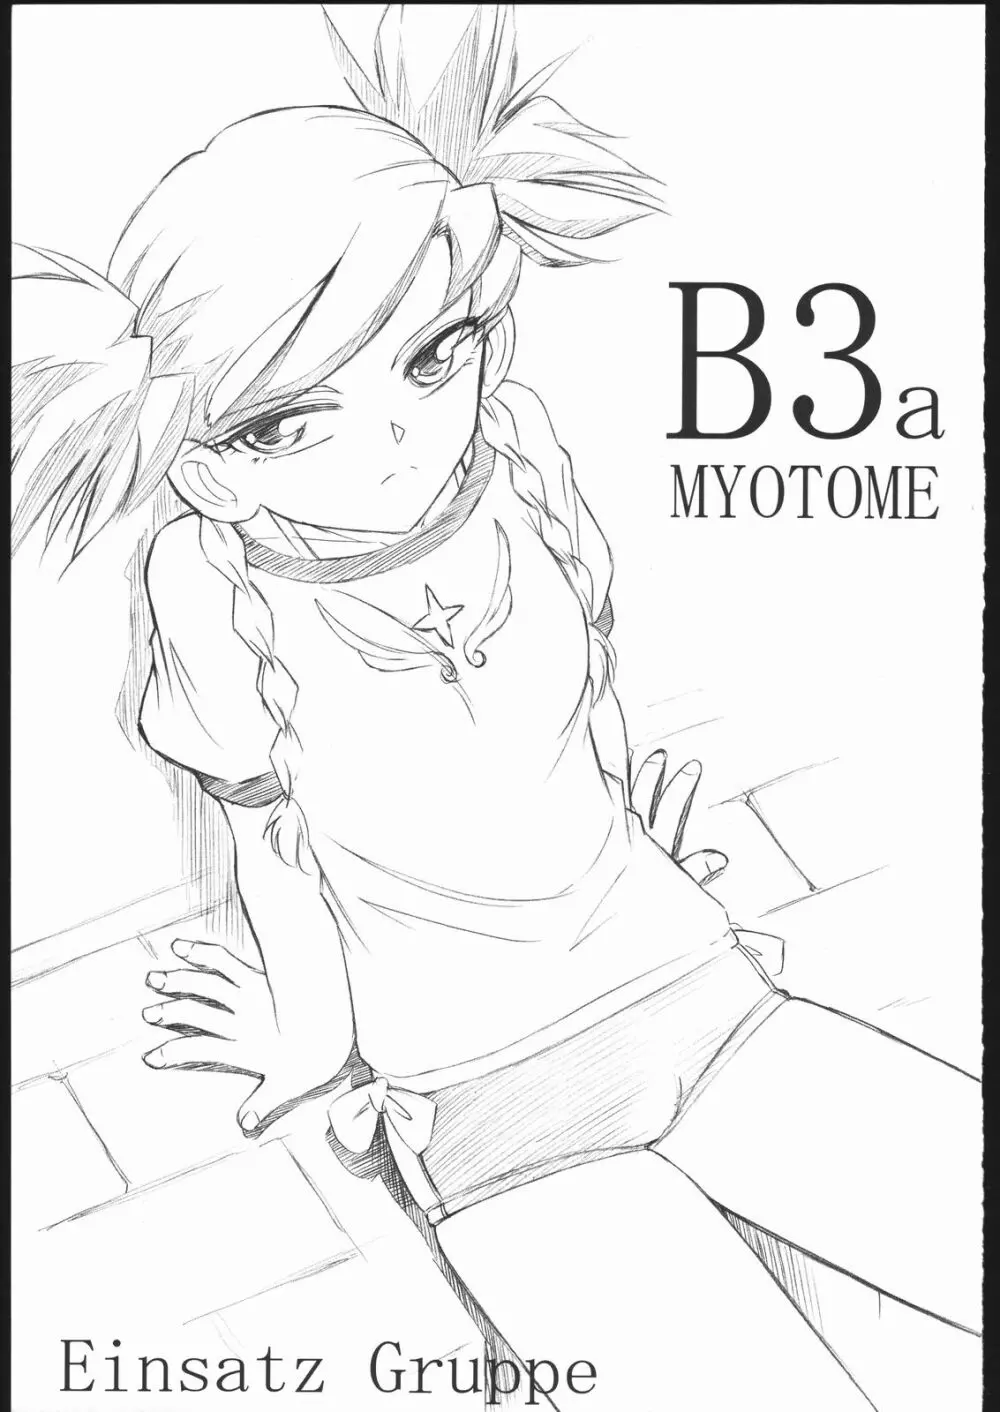 B3a MYOTOMO - page1